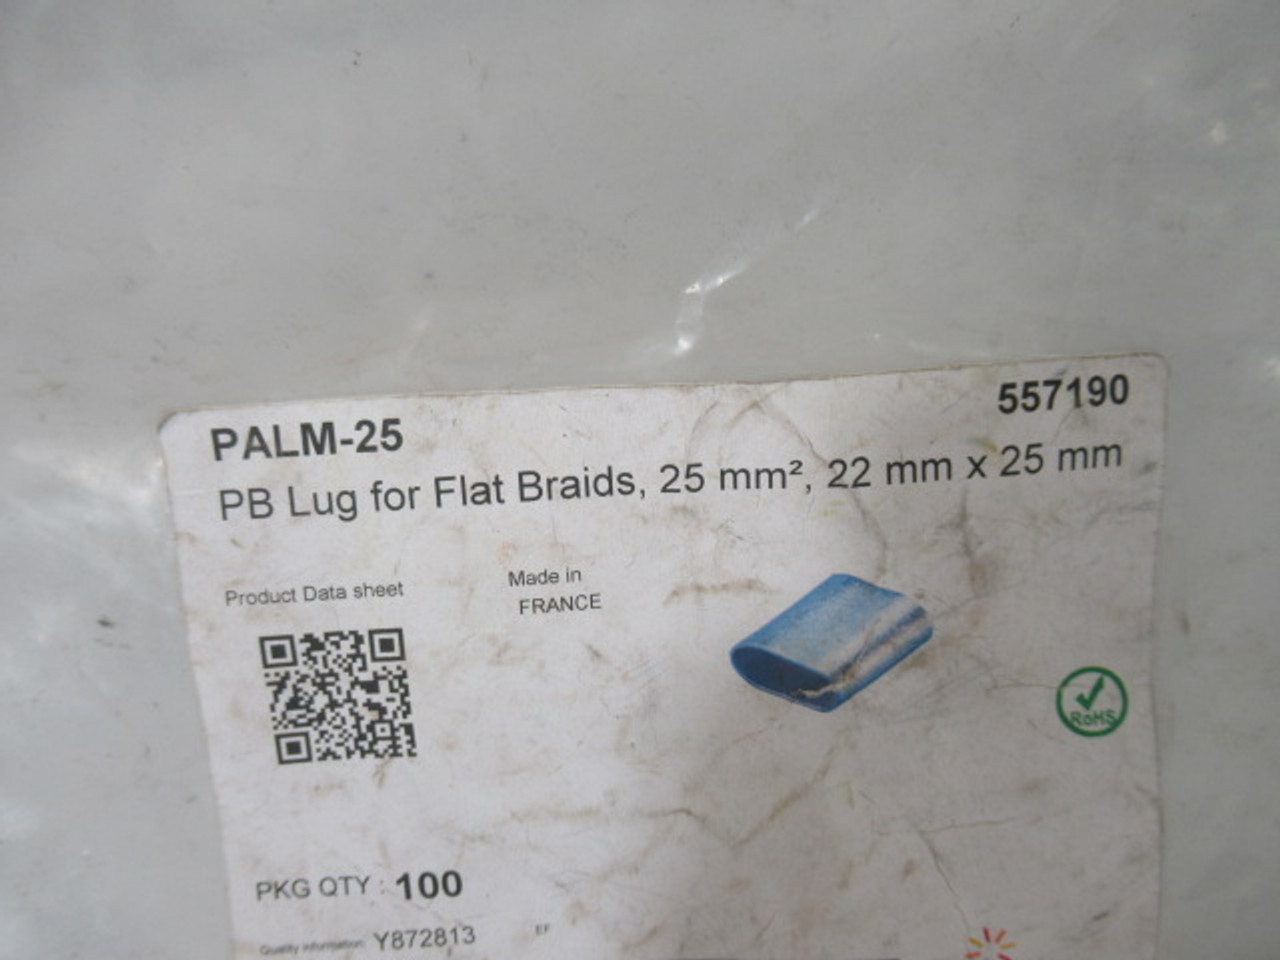 NVent 557190 PALM-25 PB Lug for Flat Braids 25mm2x22mmx25mm Lot of 79 ! NOP !